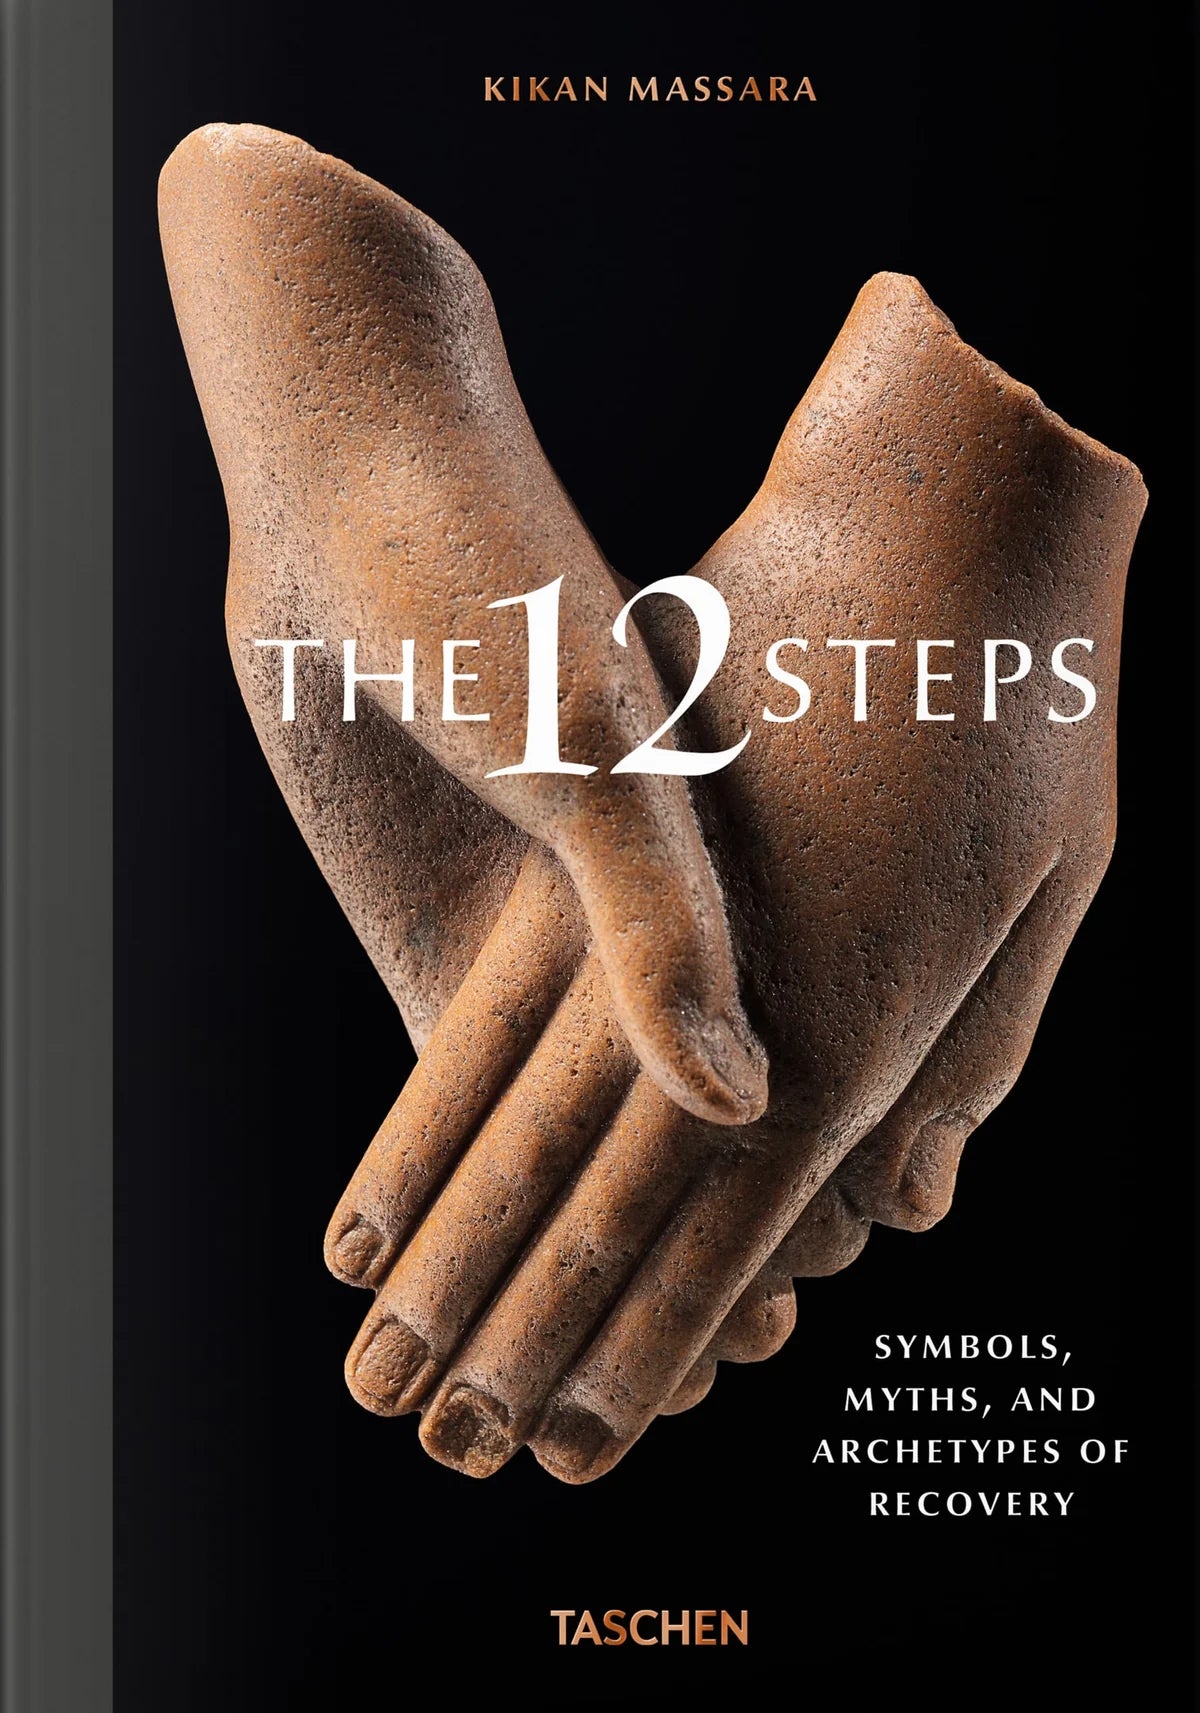 The 12 Steps by Kikan Massara